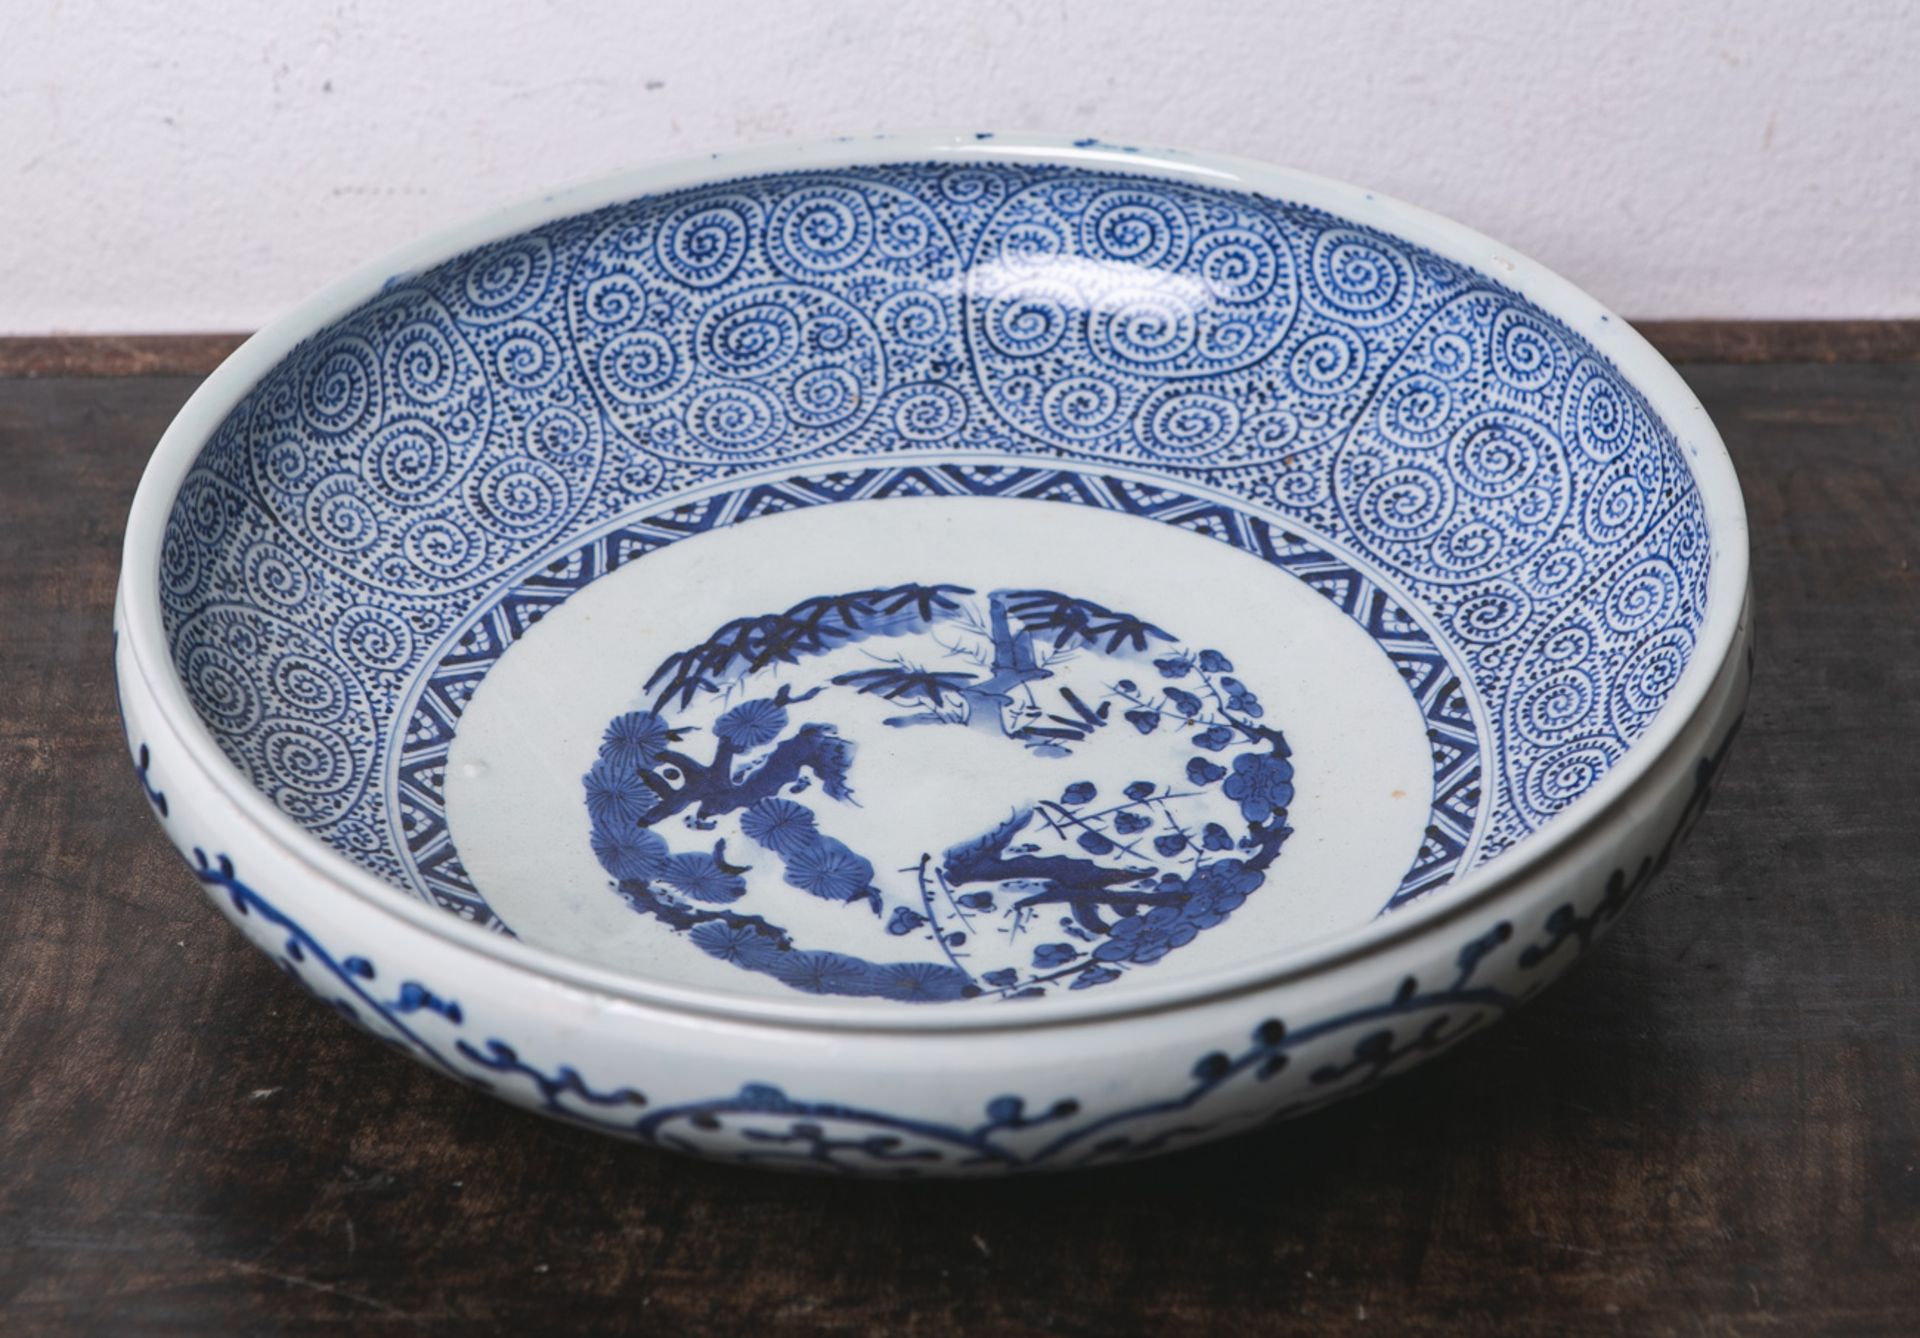 Gr. runde Porzellanschale (Japan, wohl 19. Jahrhundert), blau-weiße Bemalung,